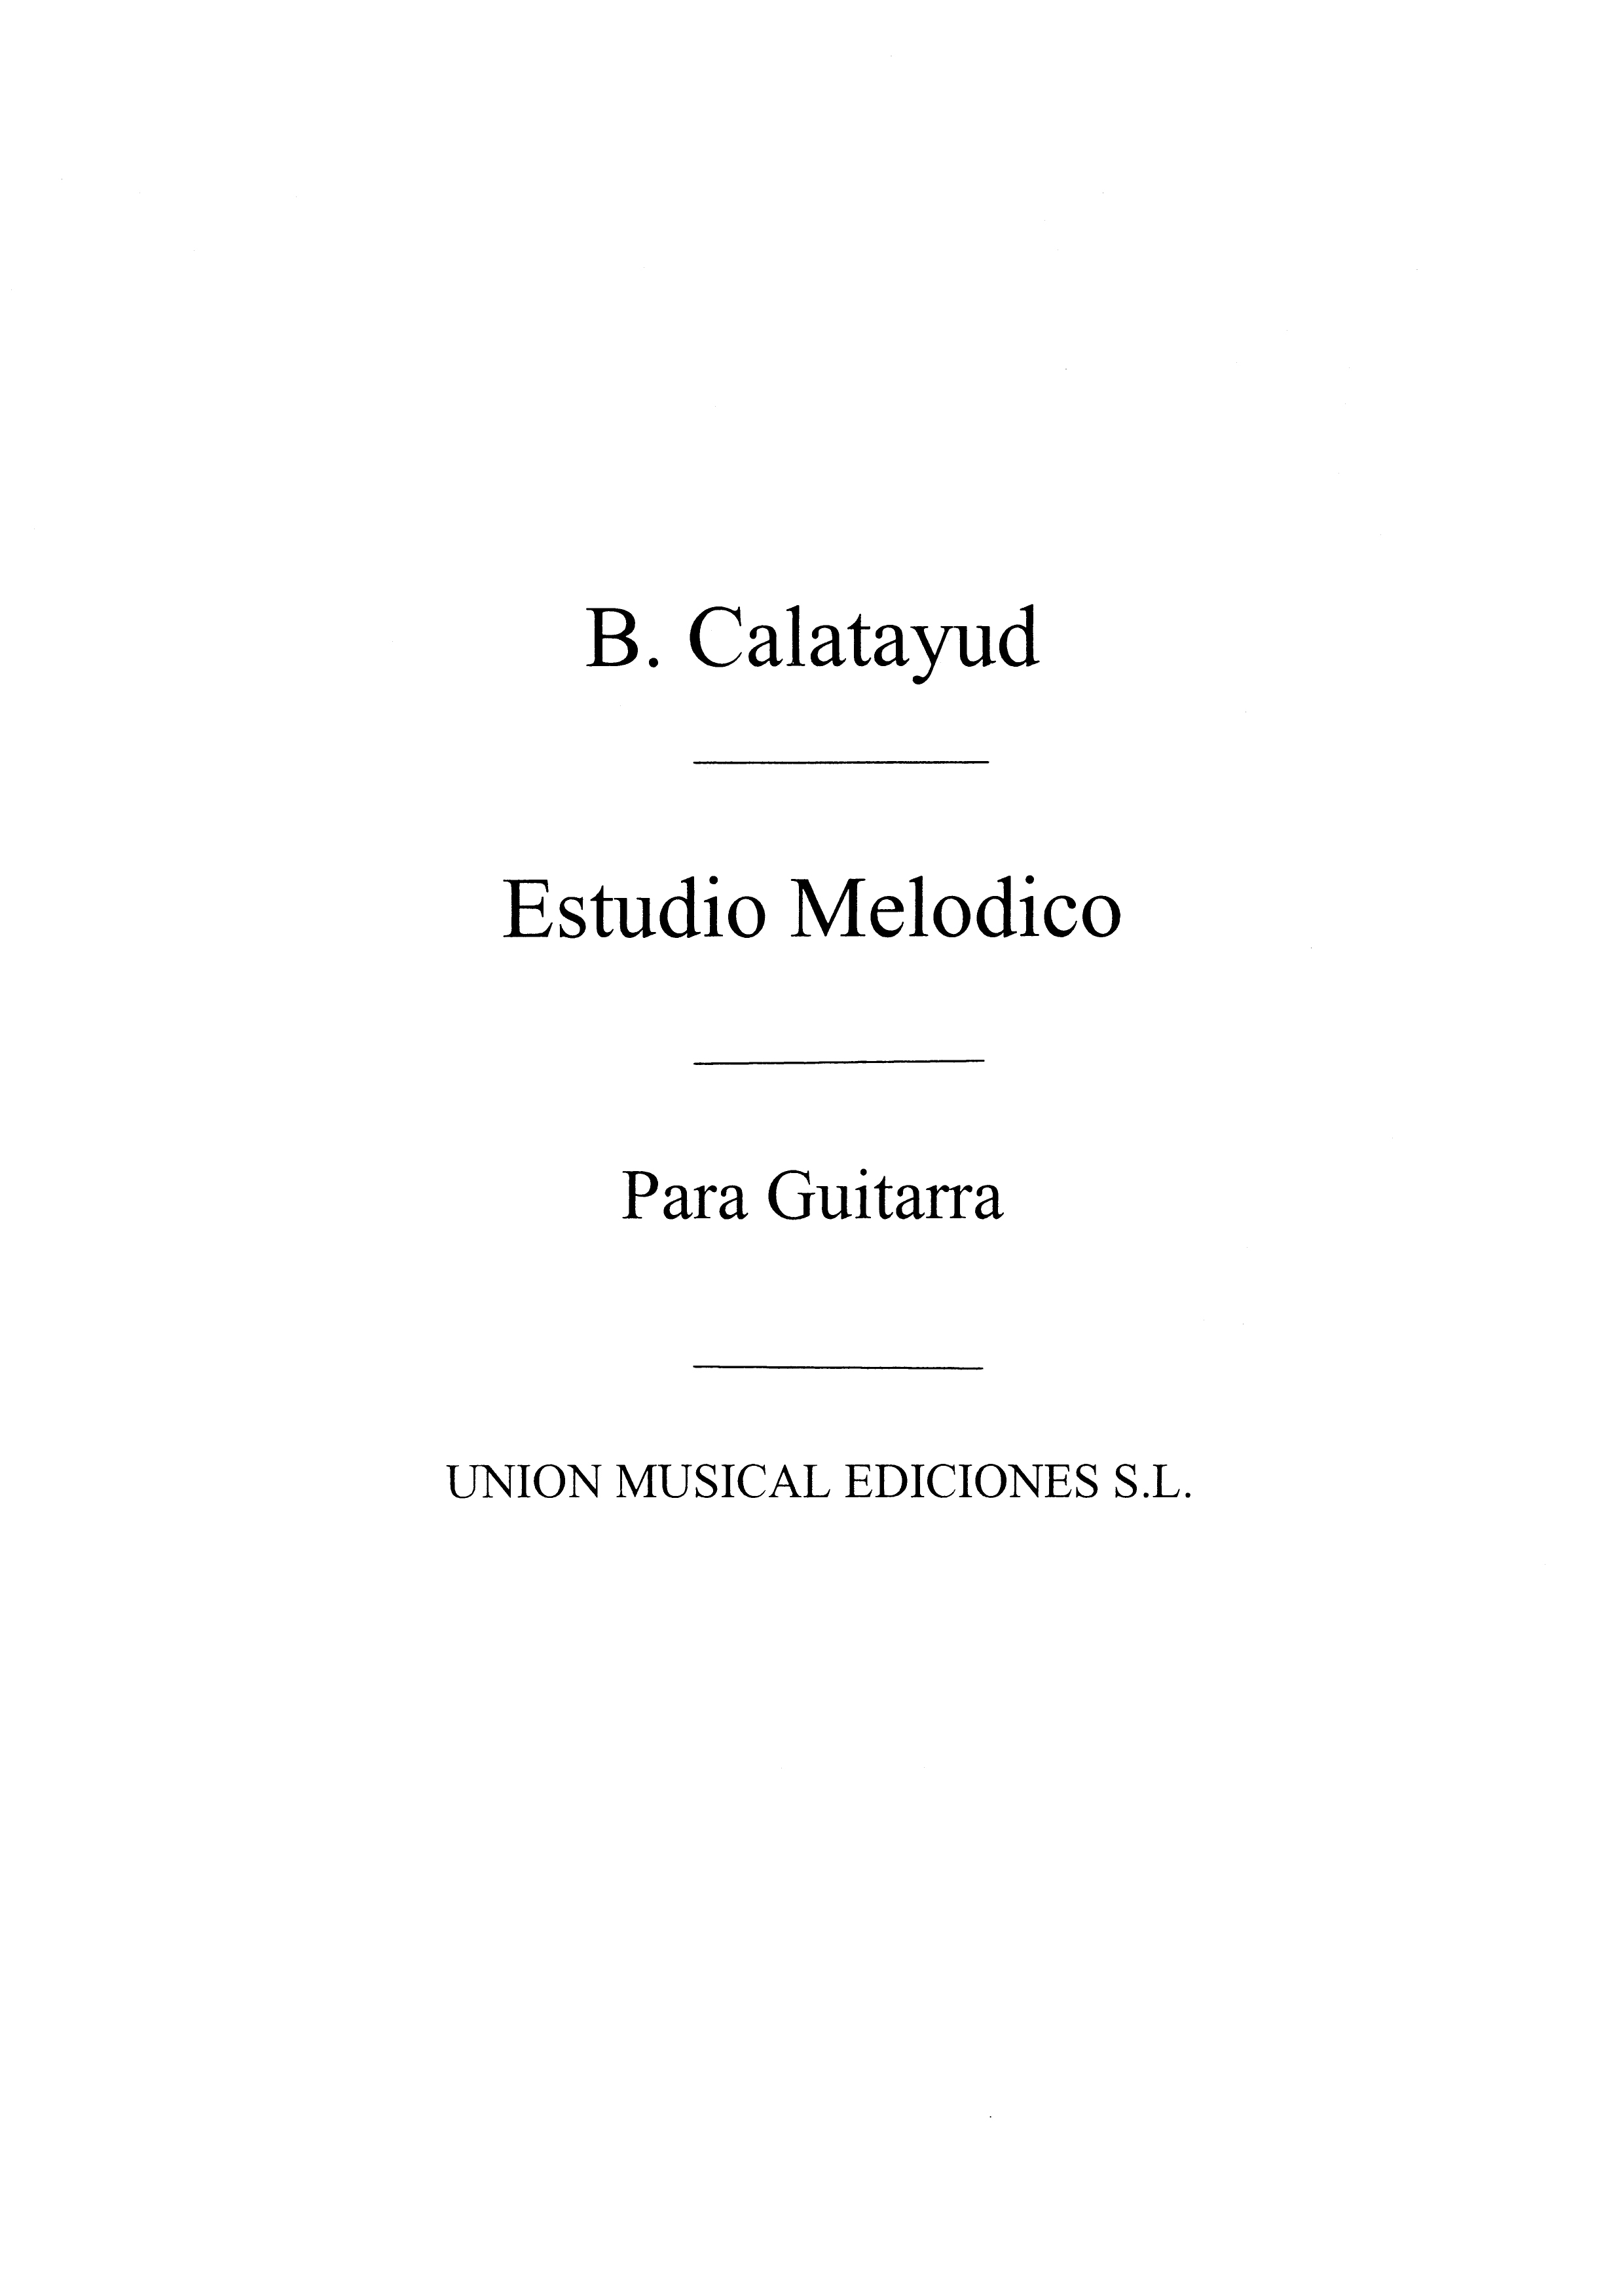 Calatayud: Estudio Melodico for Guitar